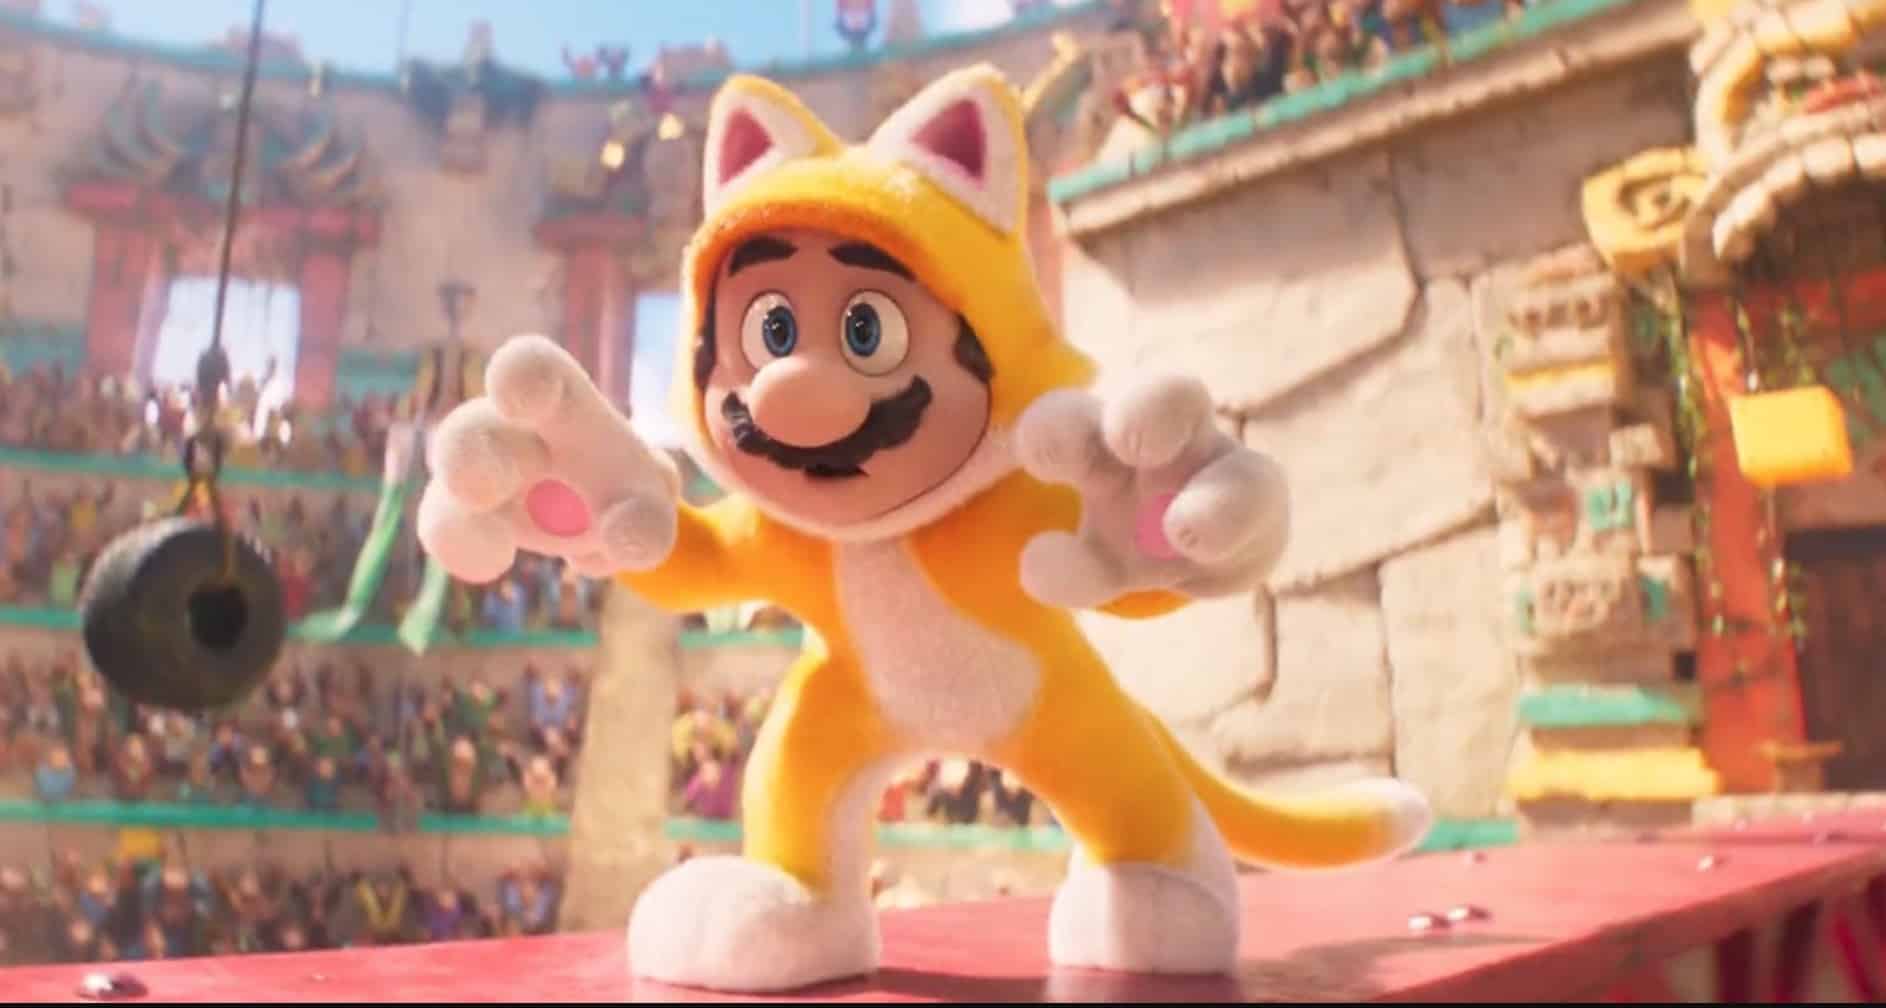 Nintendo The Super Mario Bros. Movie Cat Mario Action Figure